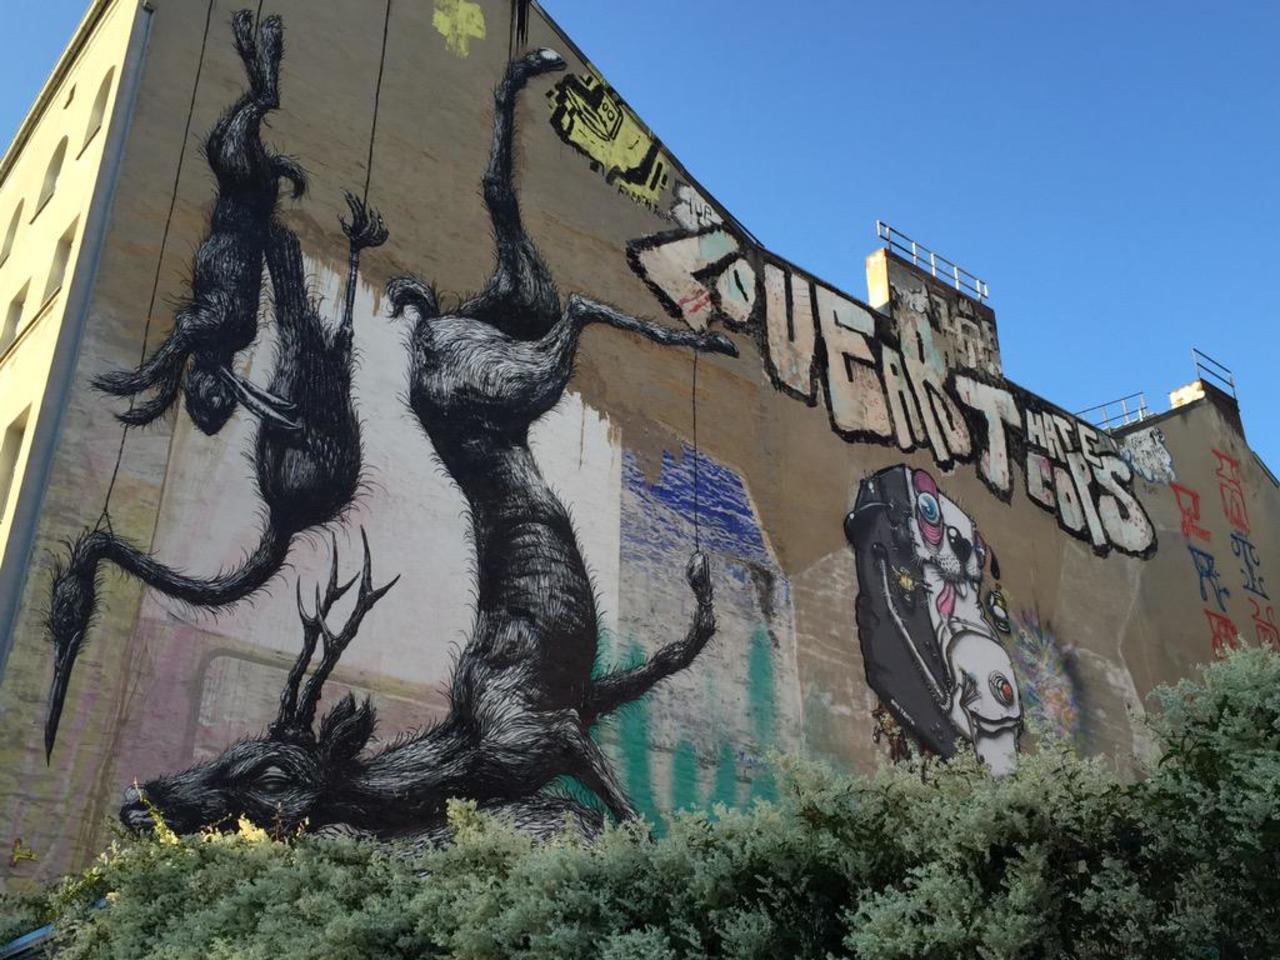 RT @MissQuesta: found my lovely people today
in kreuzberg
also found some gorgeous murals 
#streetart #graffiti #Berlin #kreuzberg http://t.co/7XOCHZaicQ